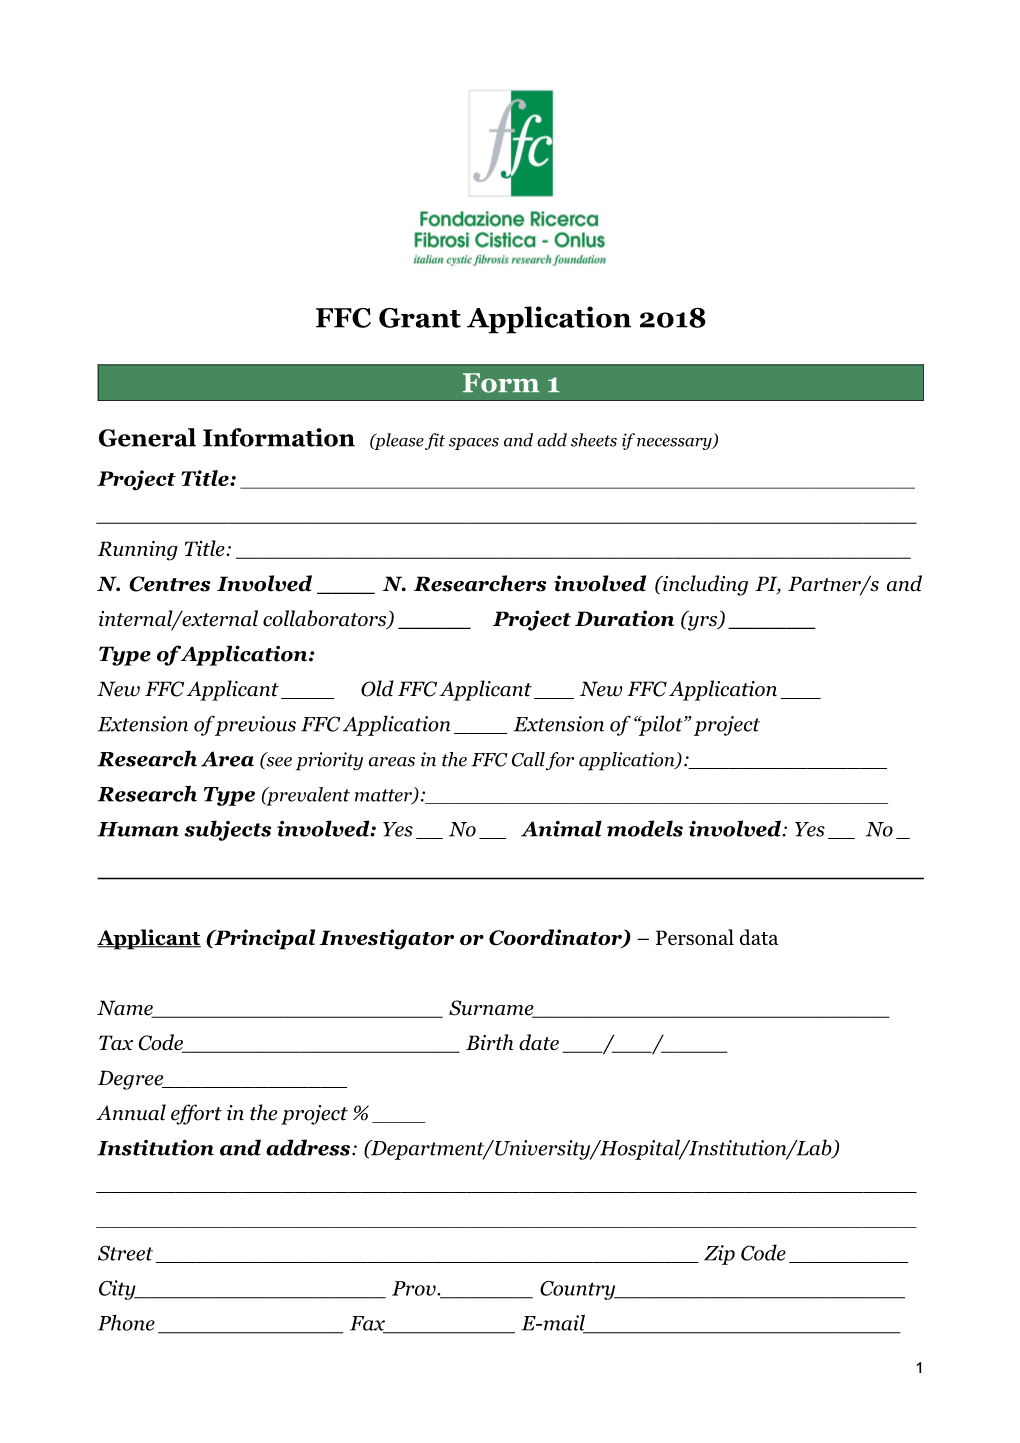 FFC Grant Application 2018